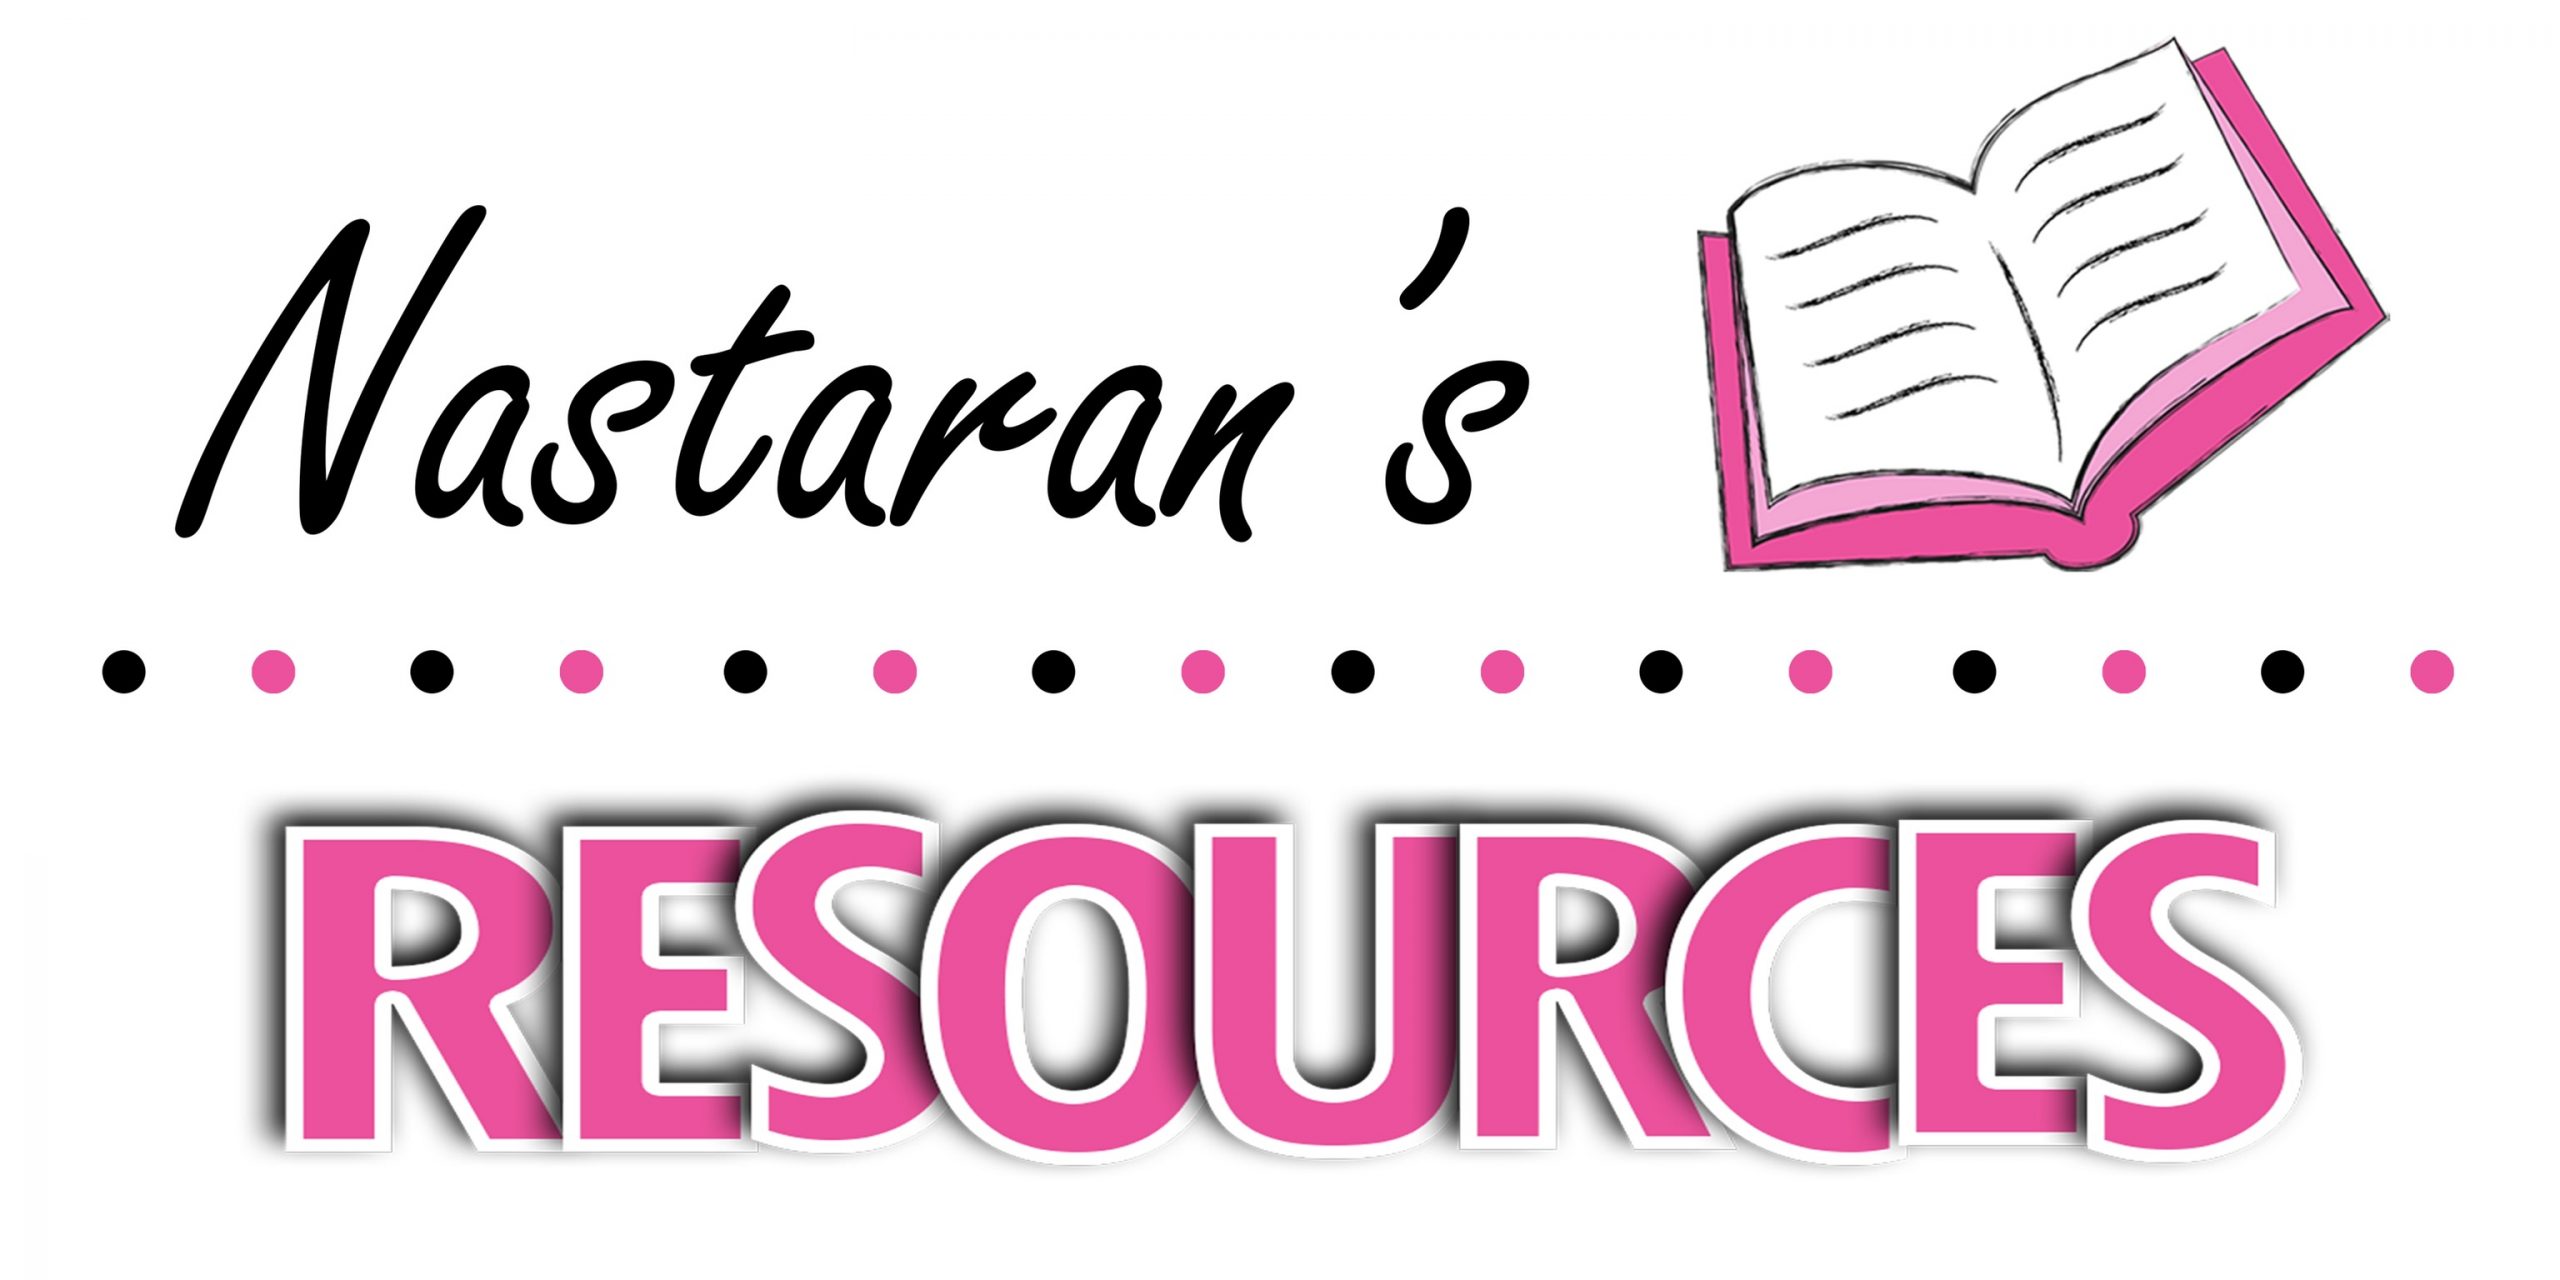 Nastaran's Resources